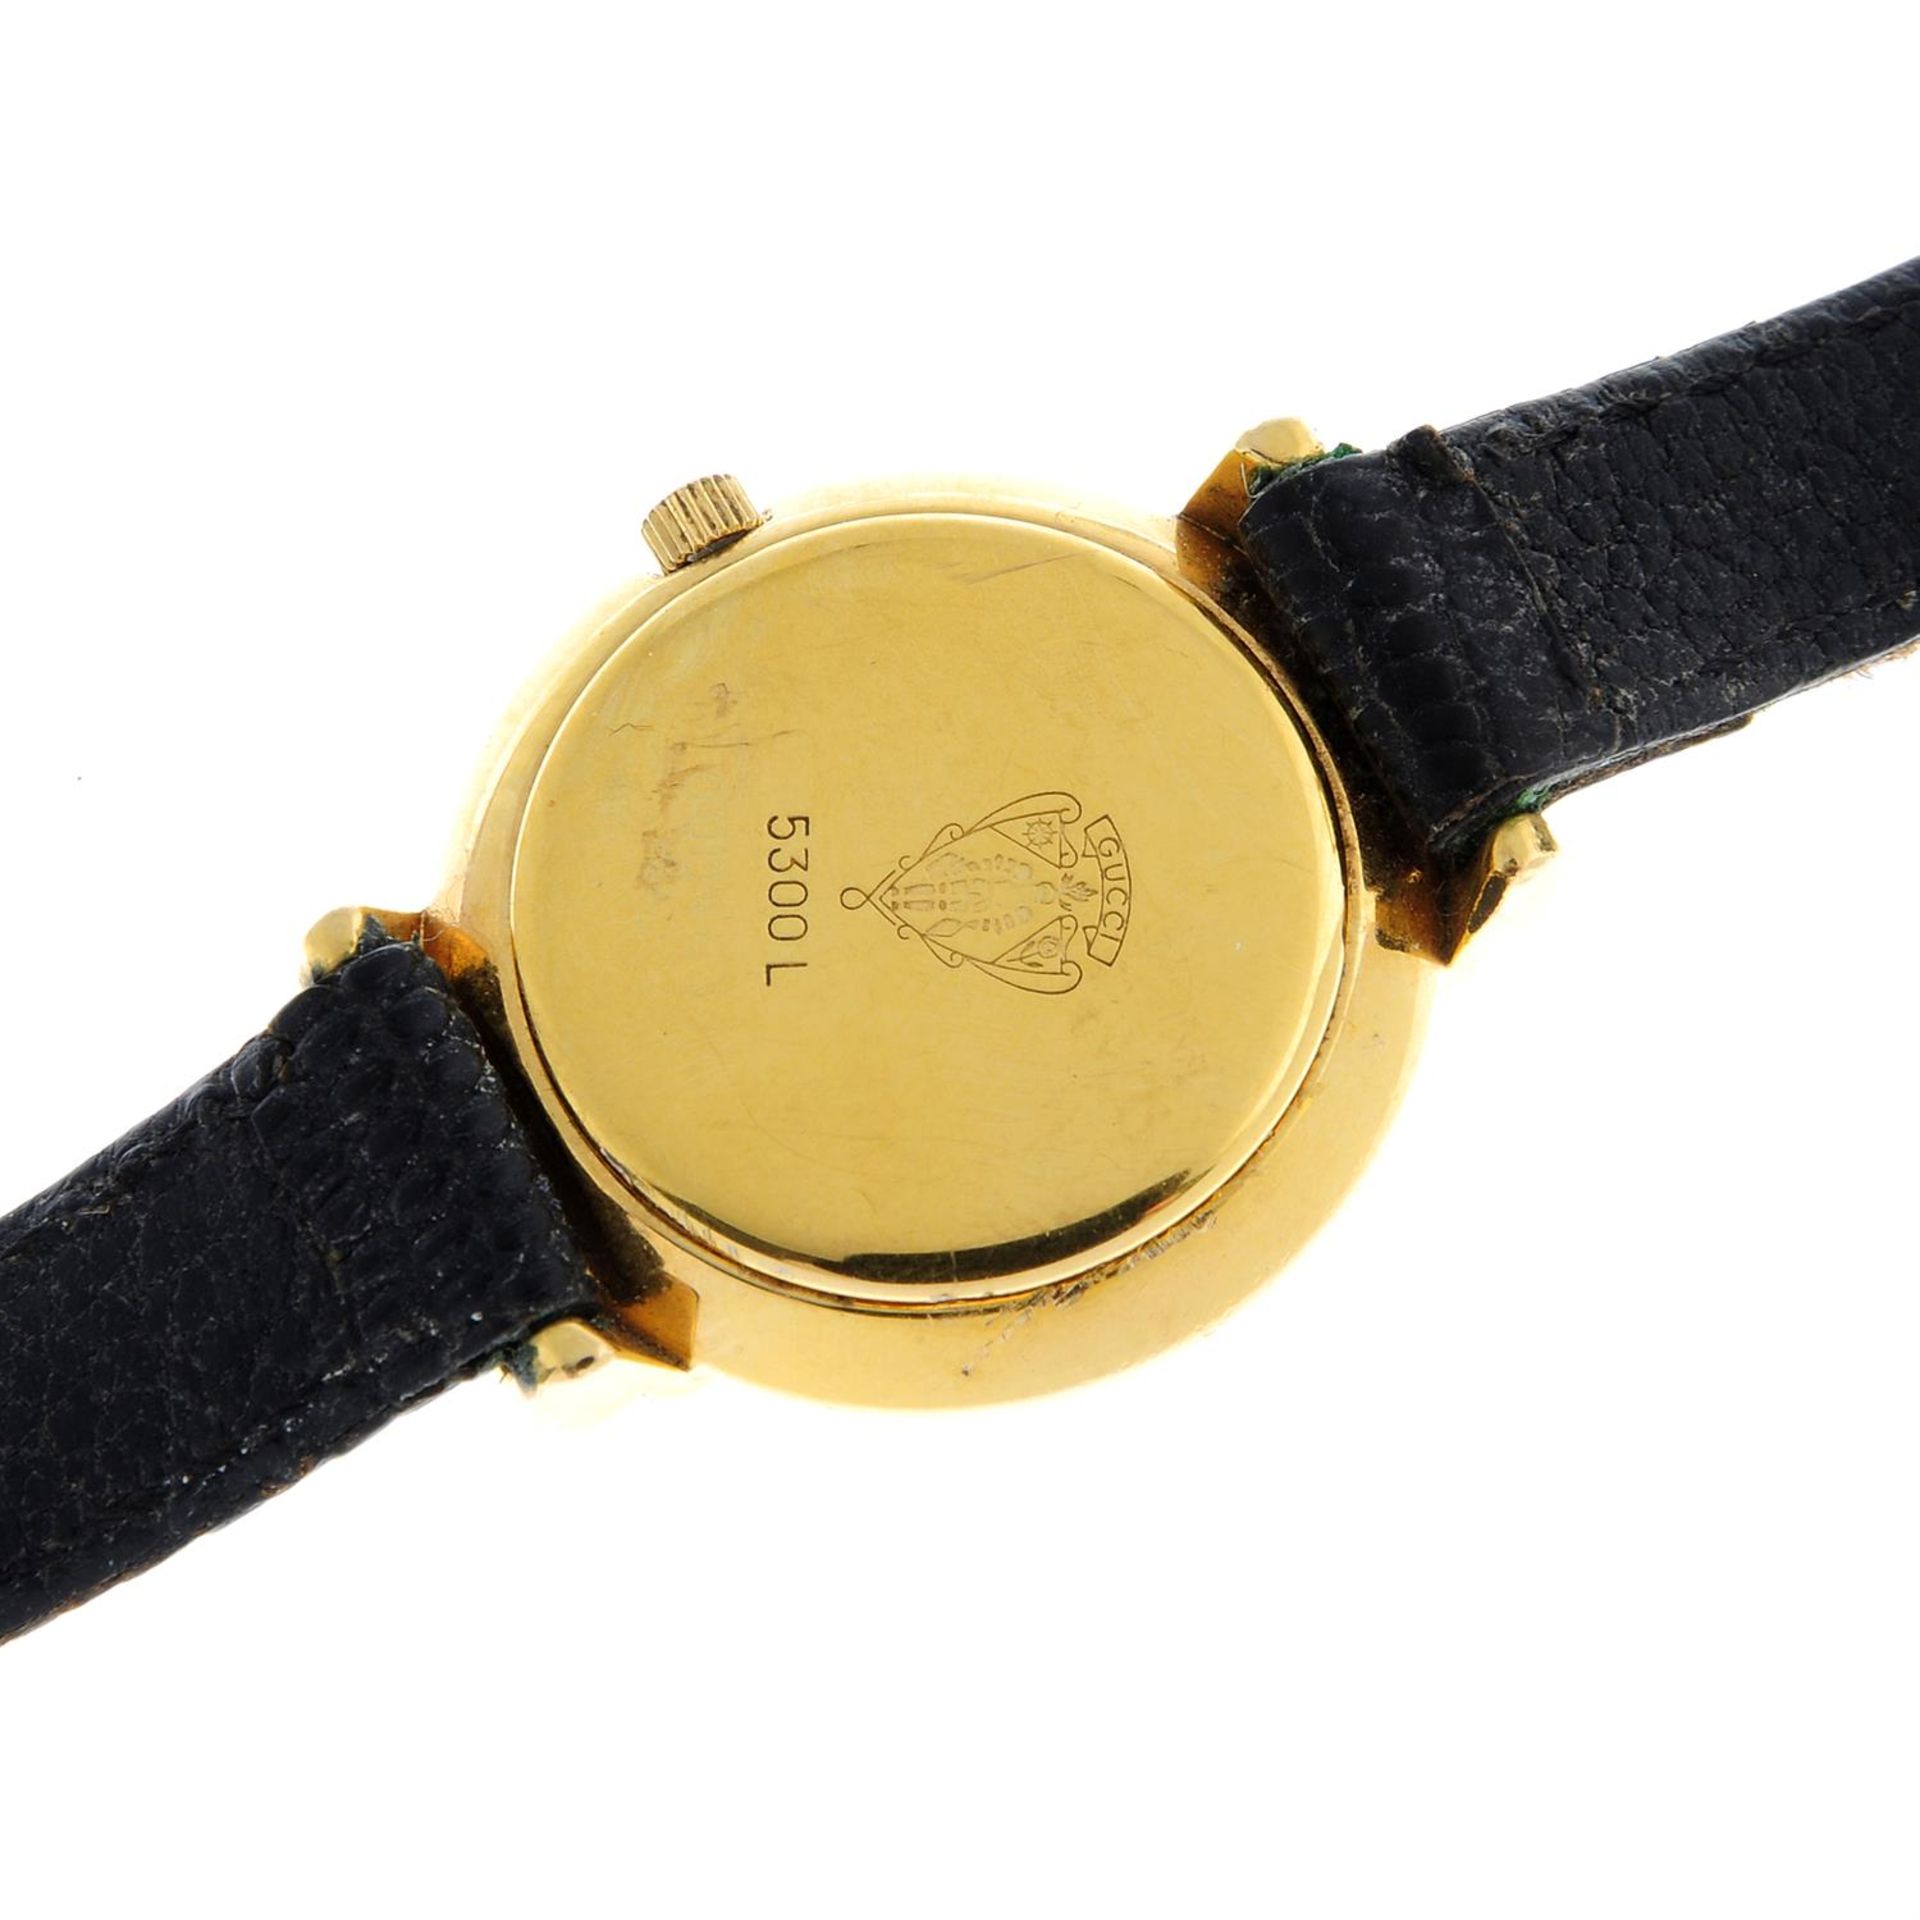 Gucci - a 5300L wrist watch, 23mm. - Image 4 of 4